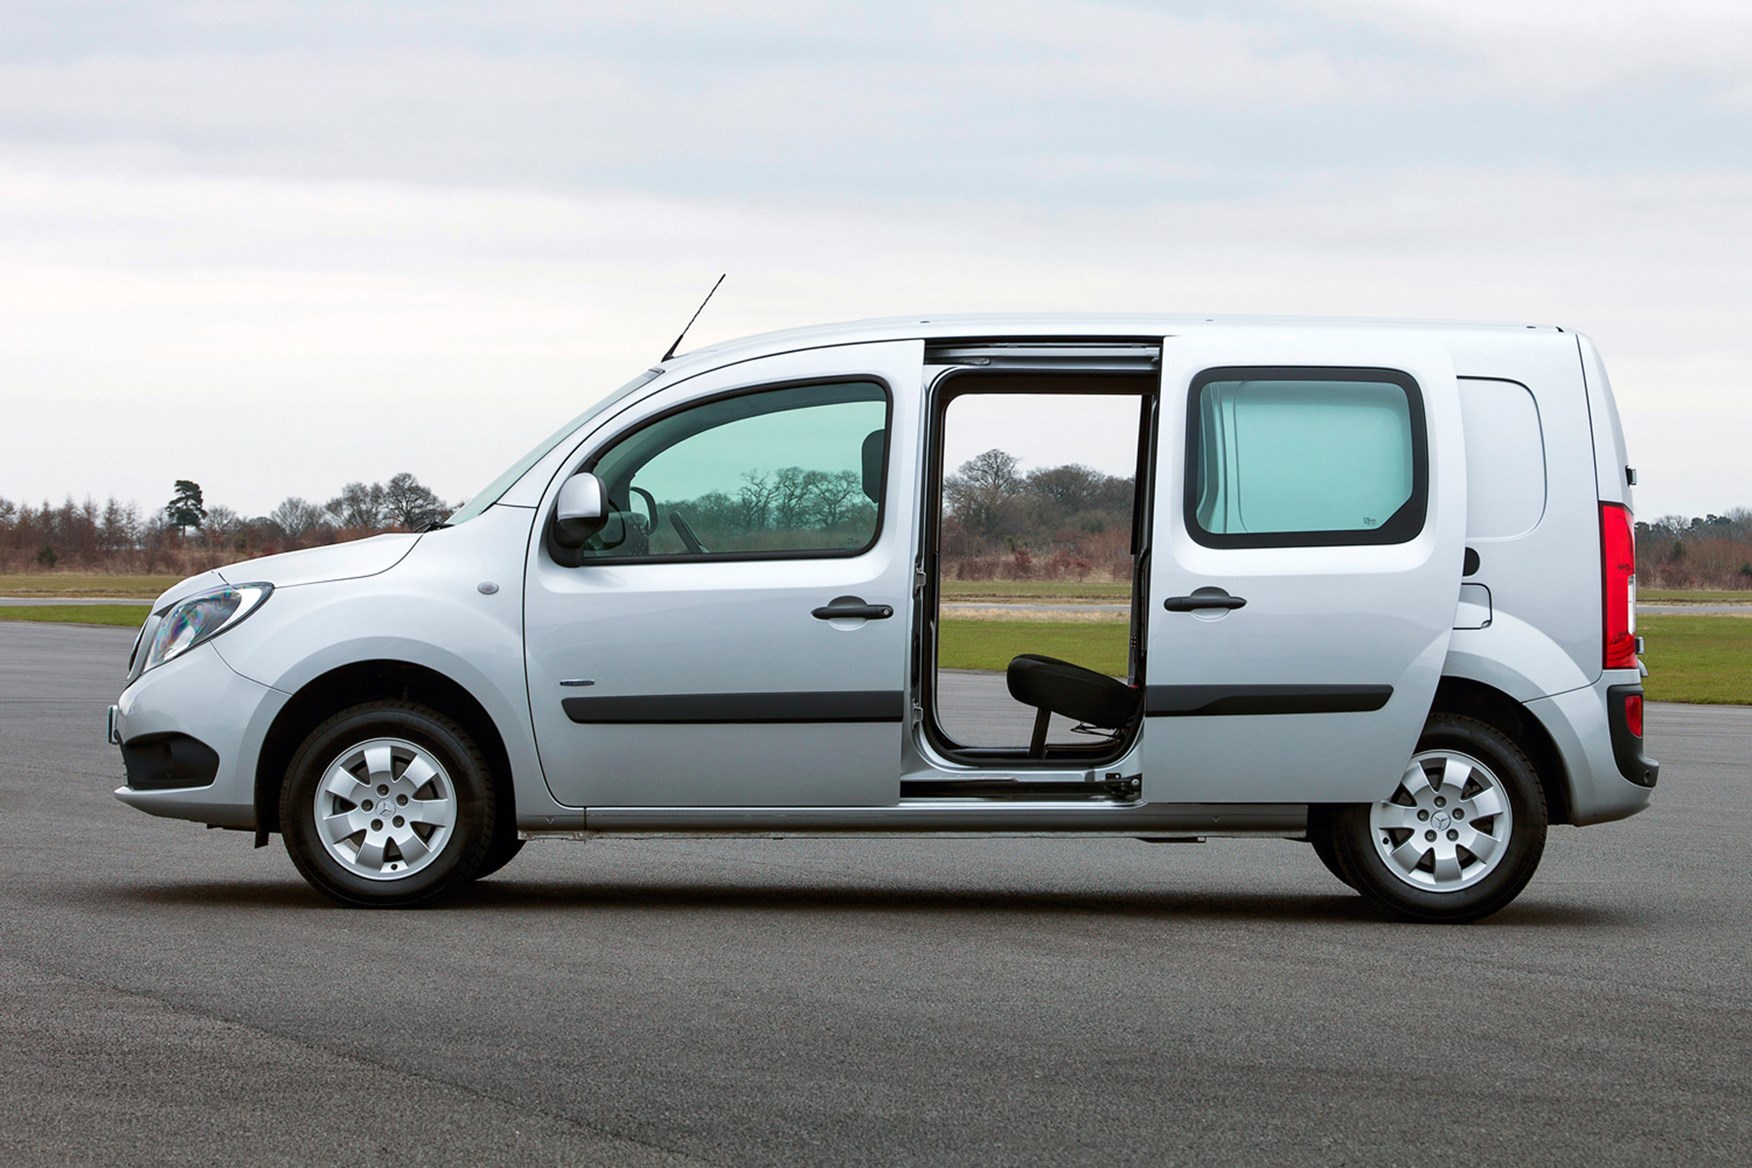 Mercedes-Benz Citan full review on Parkers Vans - load area access